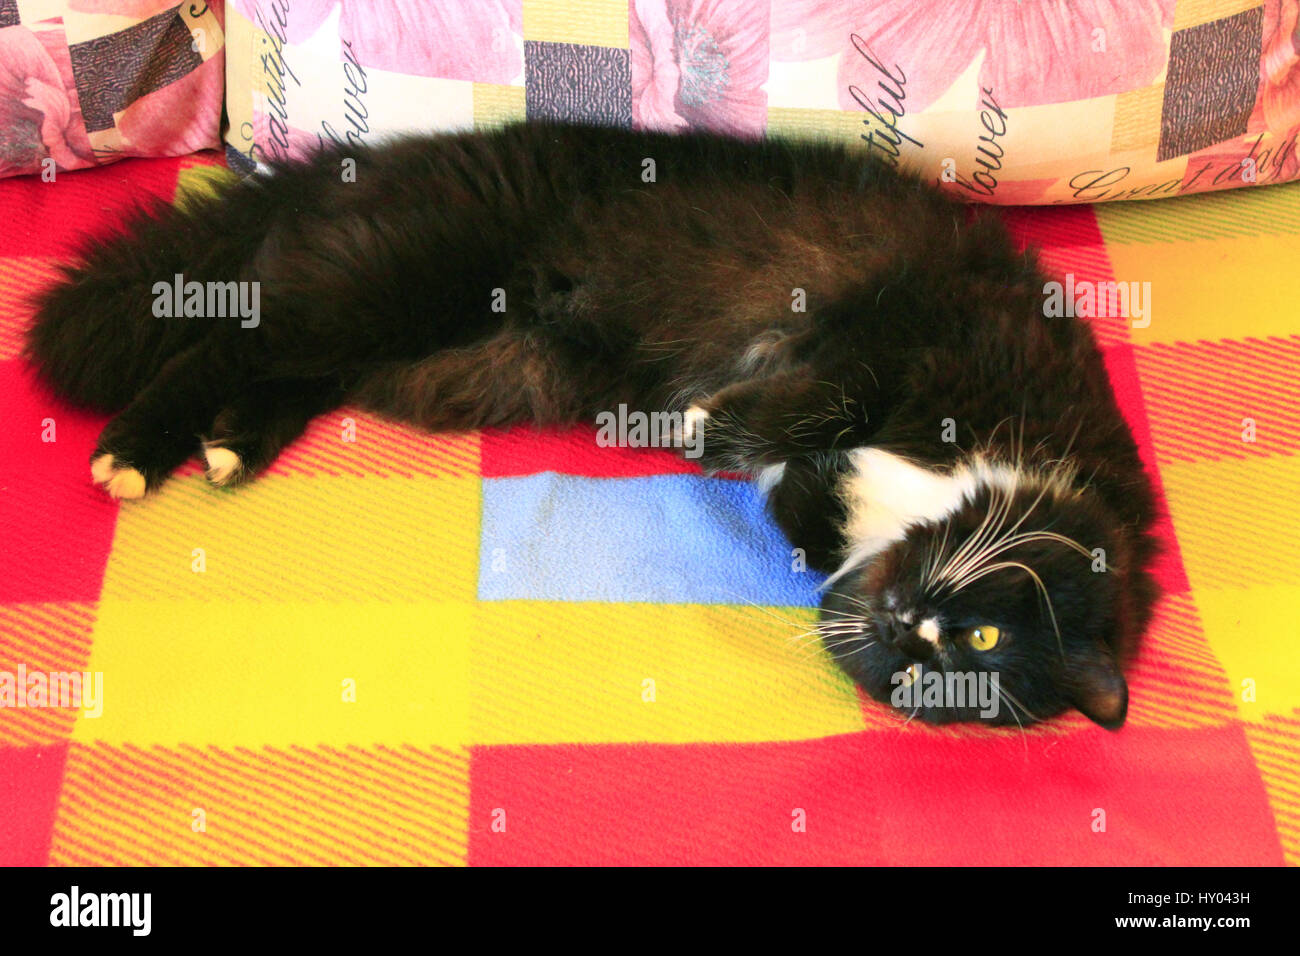 black cat sprawled on the colorful sofa Stock Photo